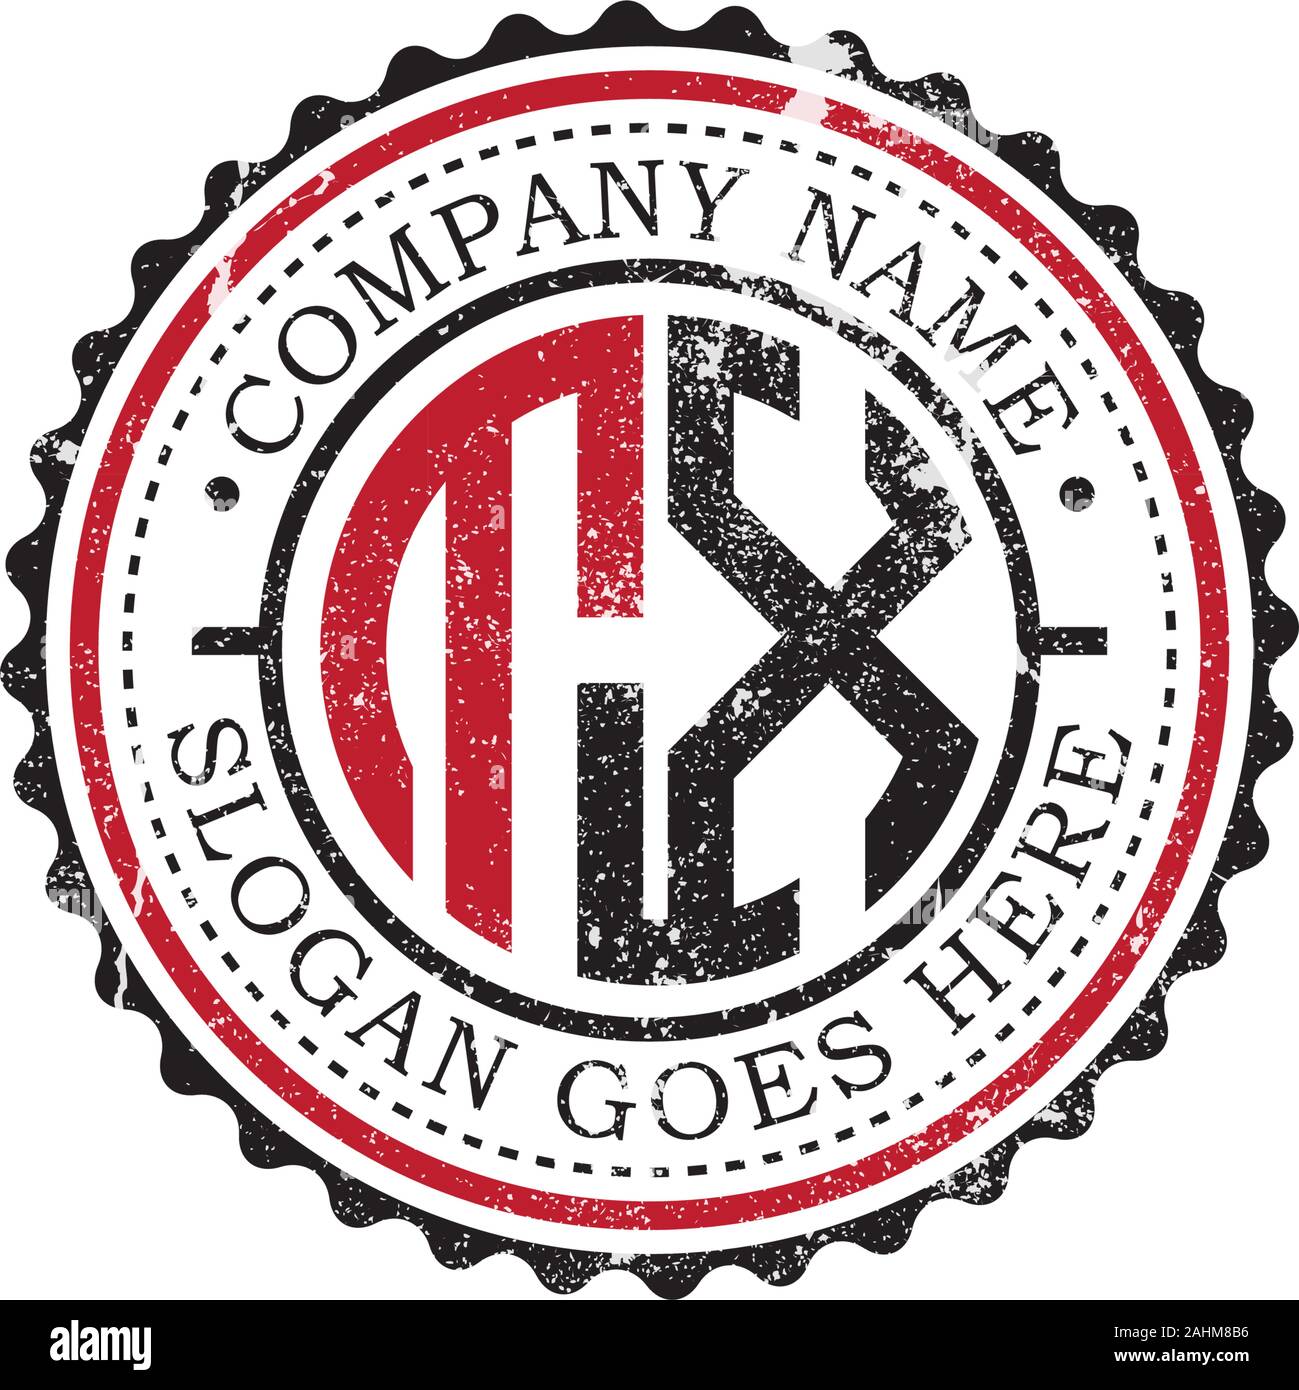 T X initial logo inspirations,vintage badge logo design, letter logo template Stock Vector